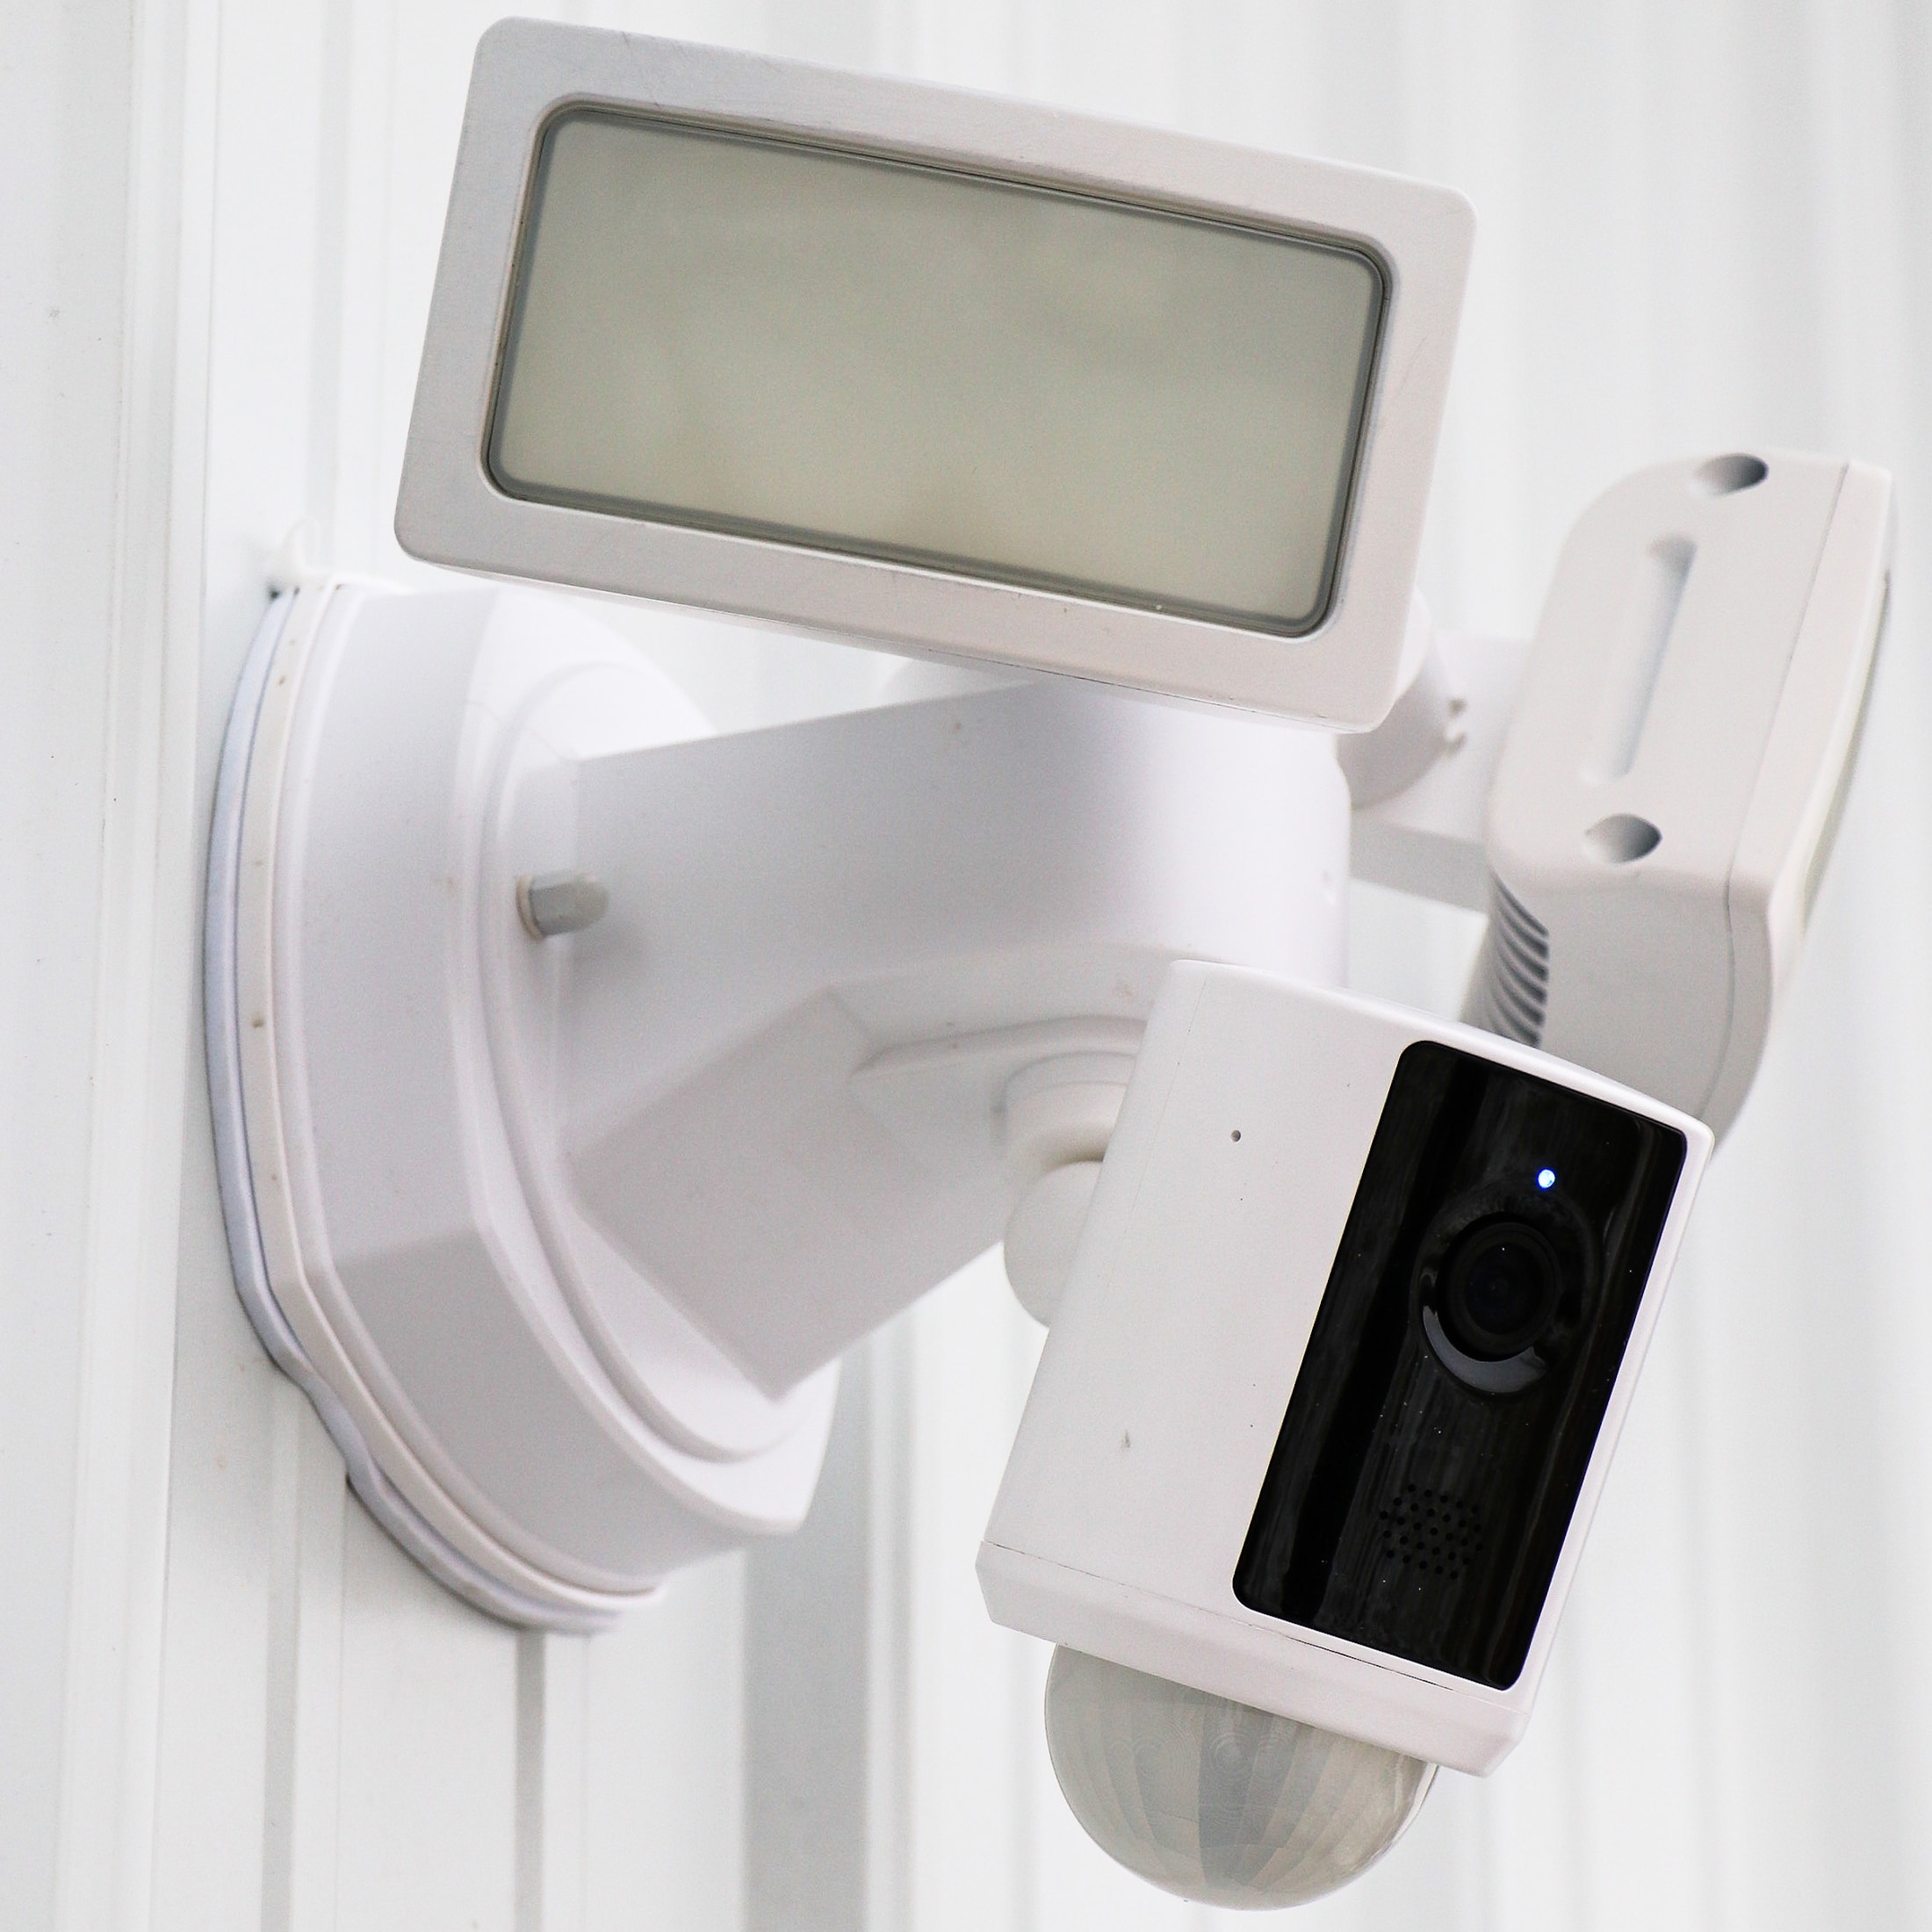 Ring Video Doorbell Pro | Ring Doorbell | Ring Doorbell for Businesses